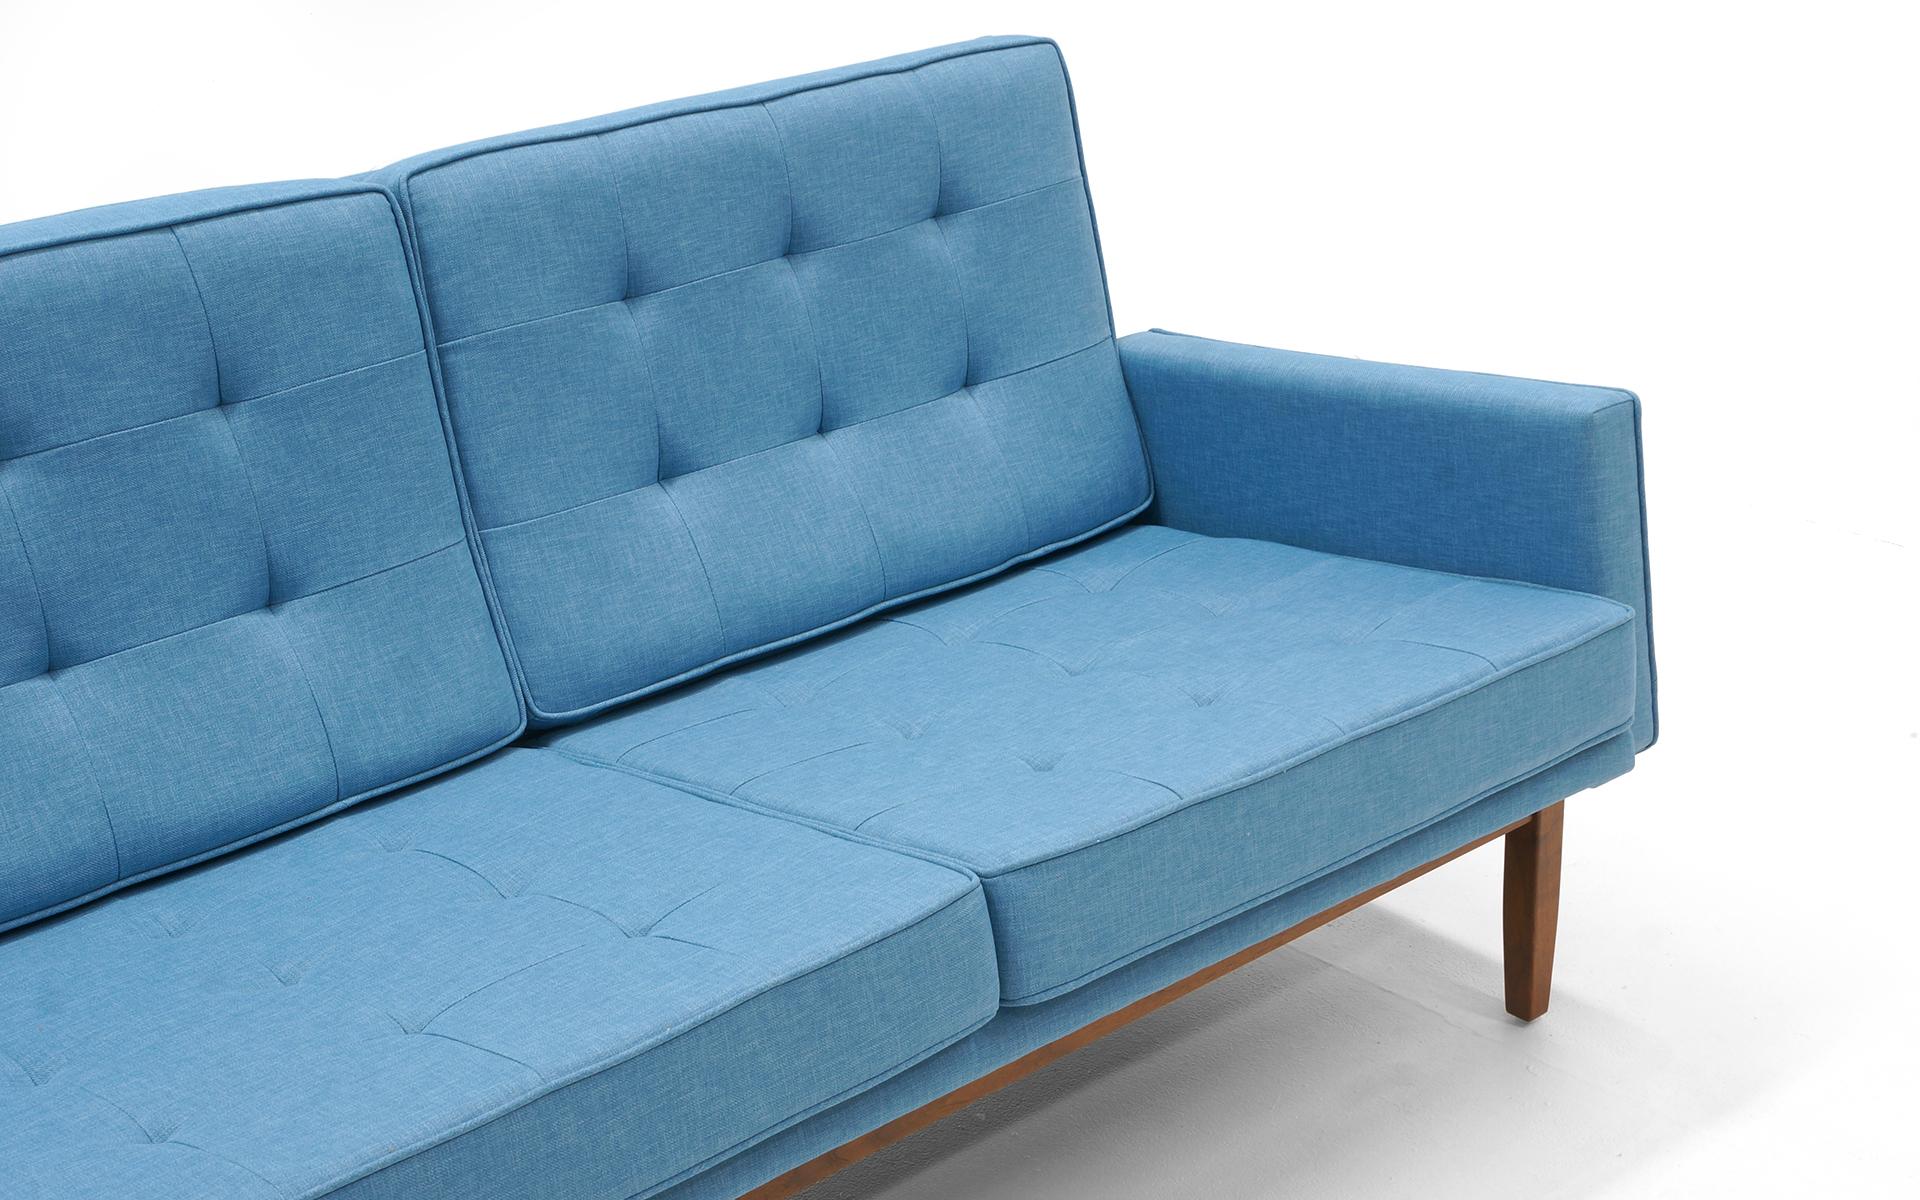 Florence Knoll Three-Seat Sofa Walnut Frame Restored, New Blue Upholstery 3